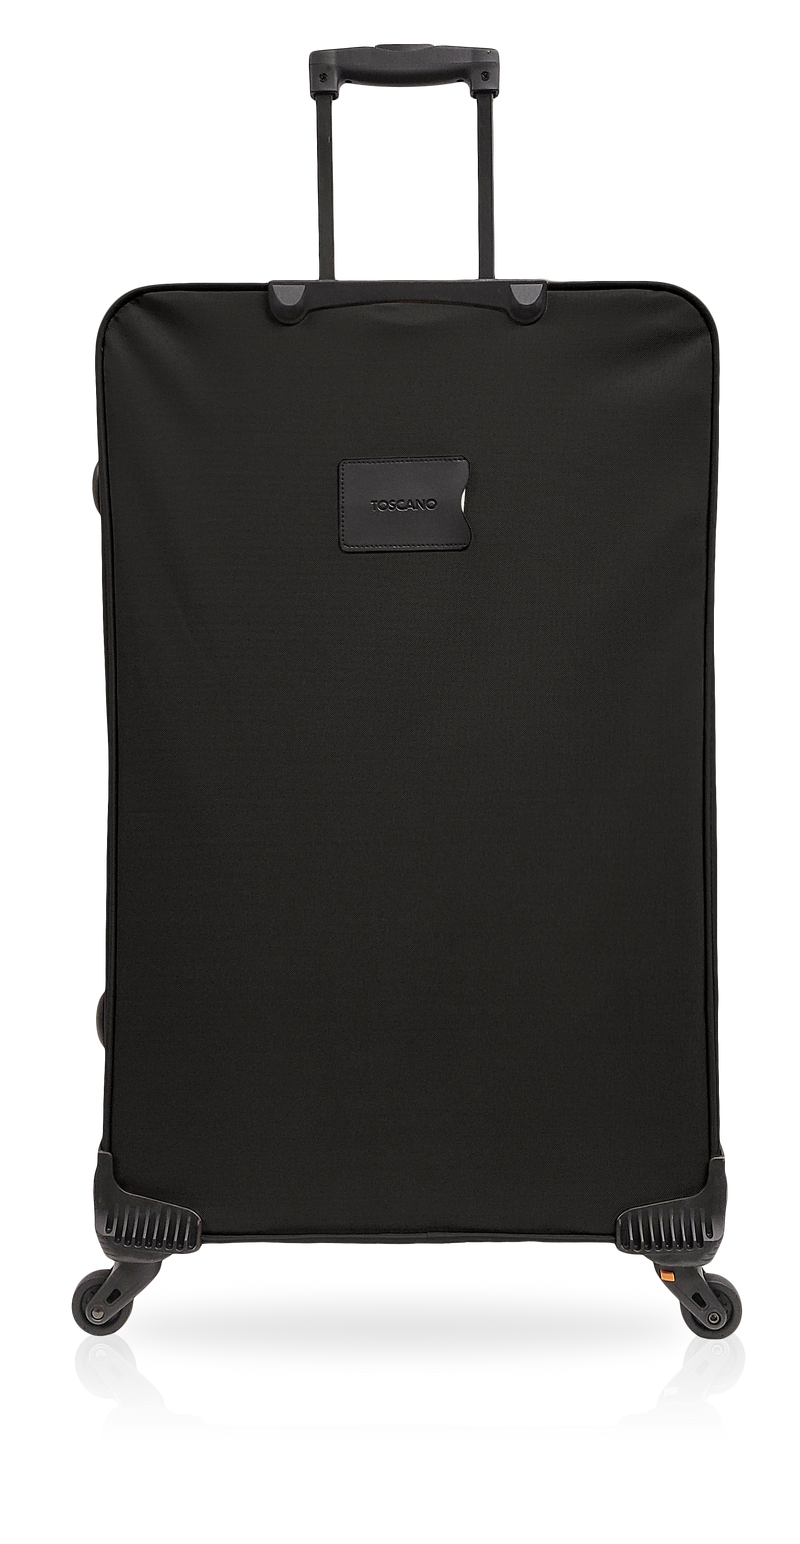 TOSCANO NOTEVOLE 31" Lightweight Travel Suitcase